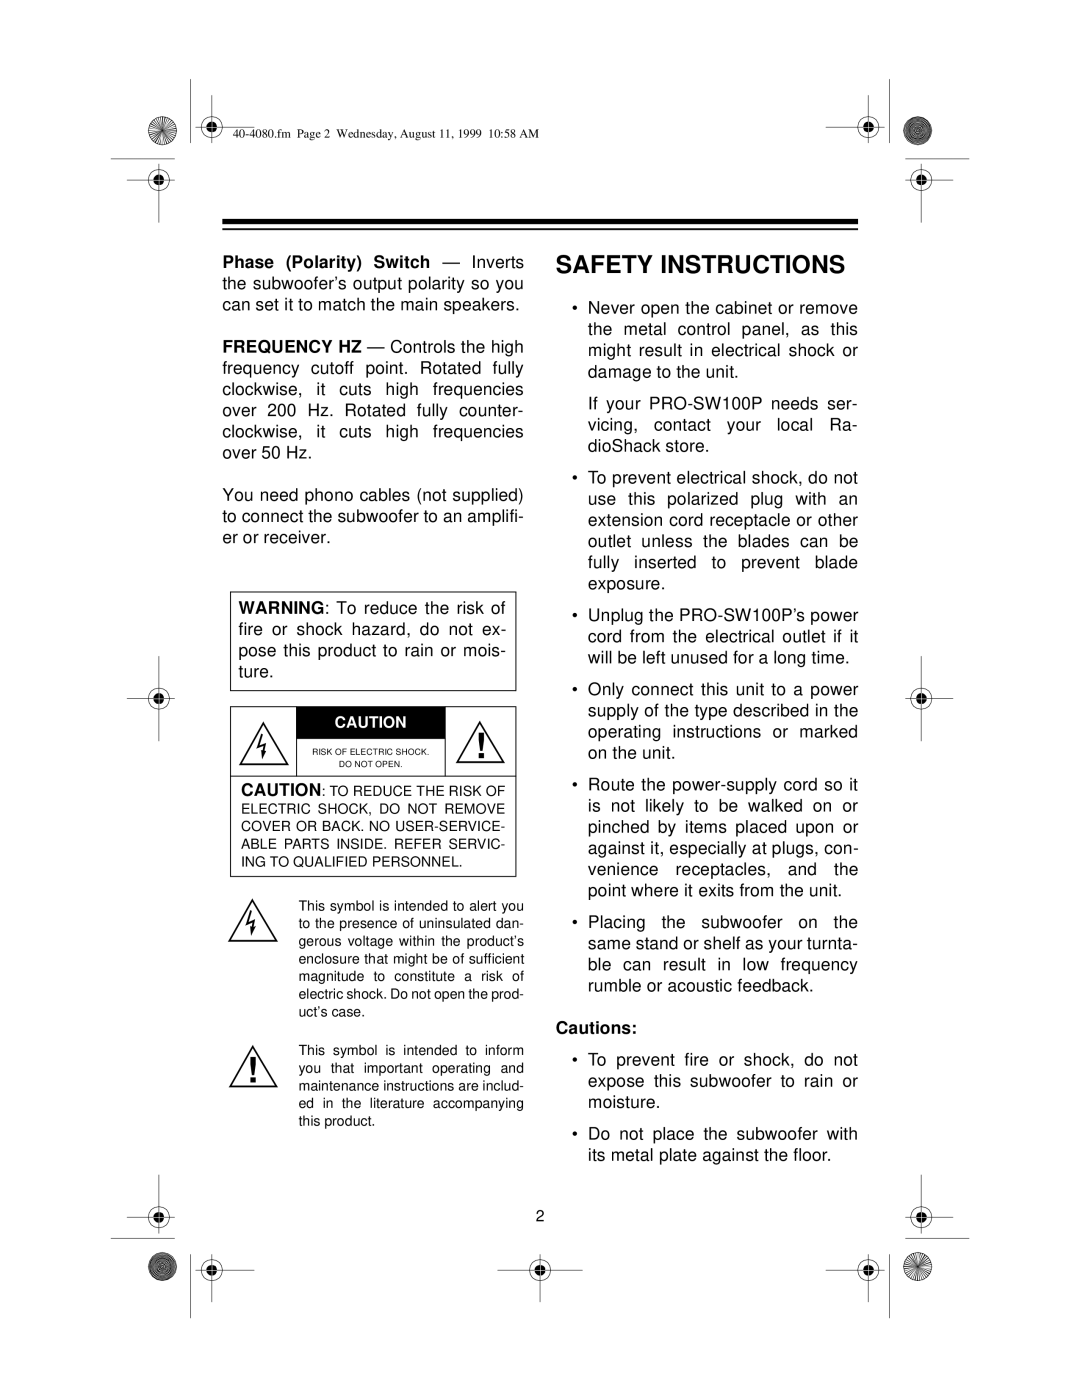 Panasonic PRO-SW100P manual Safety Instructions, Cautions 